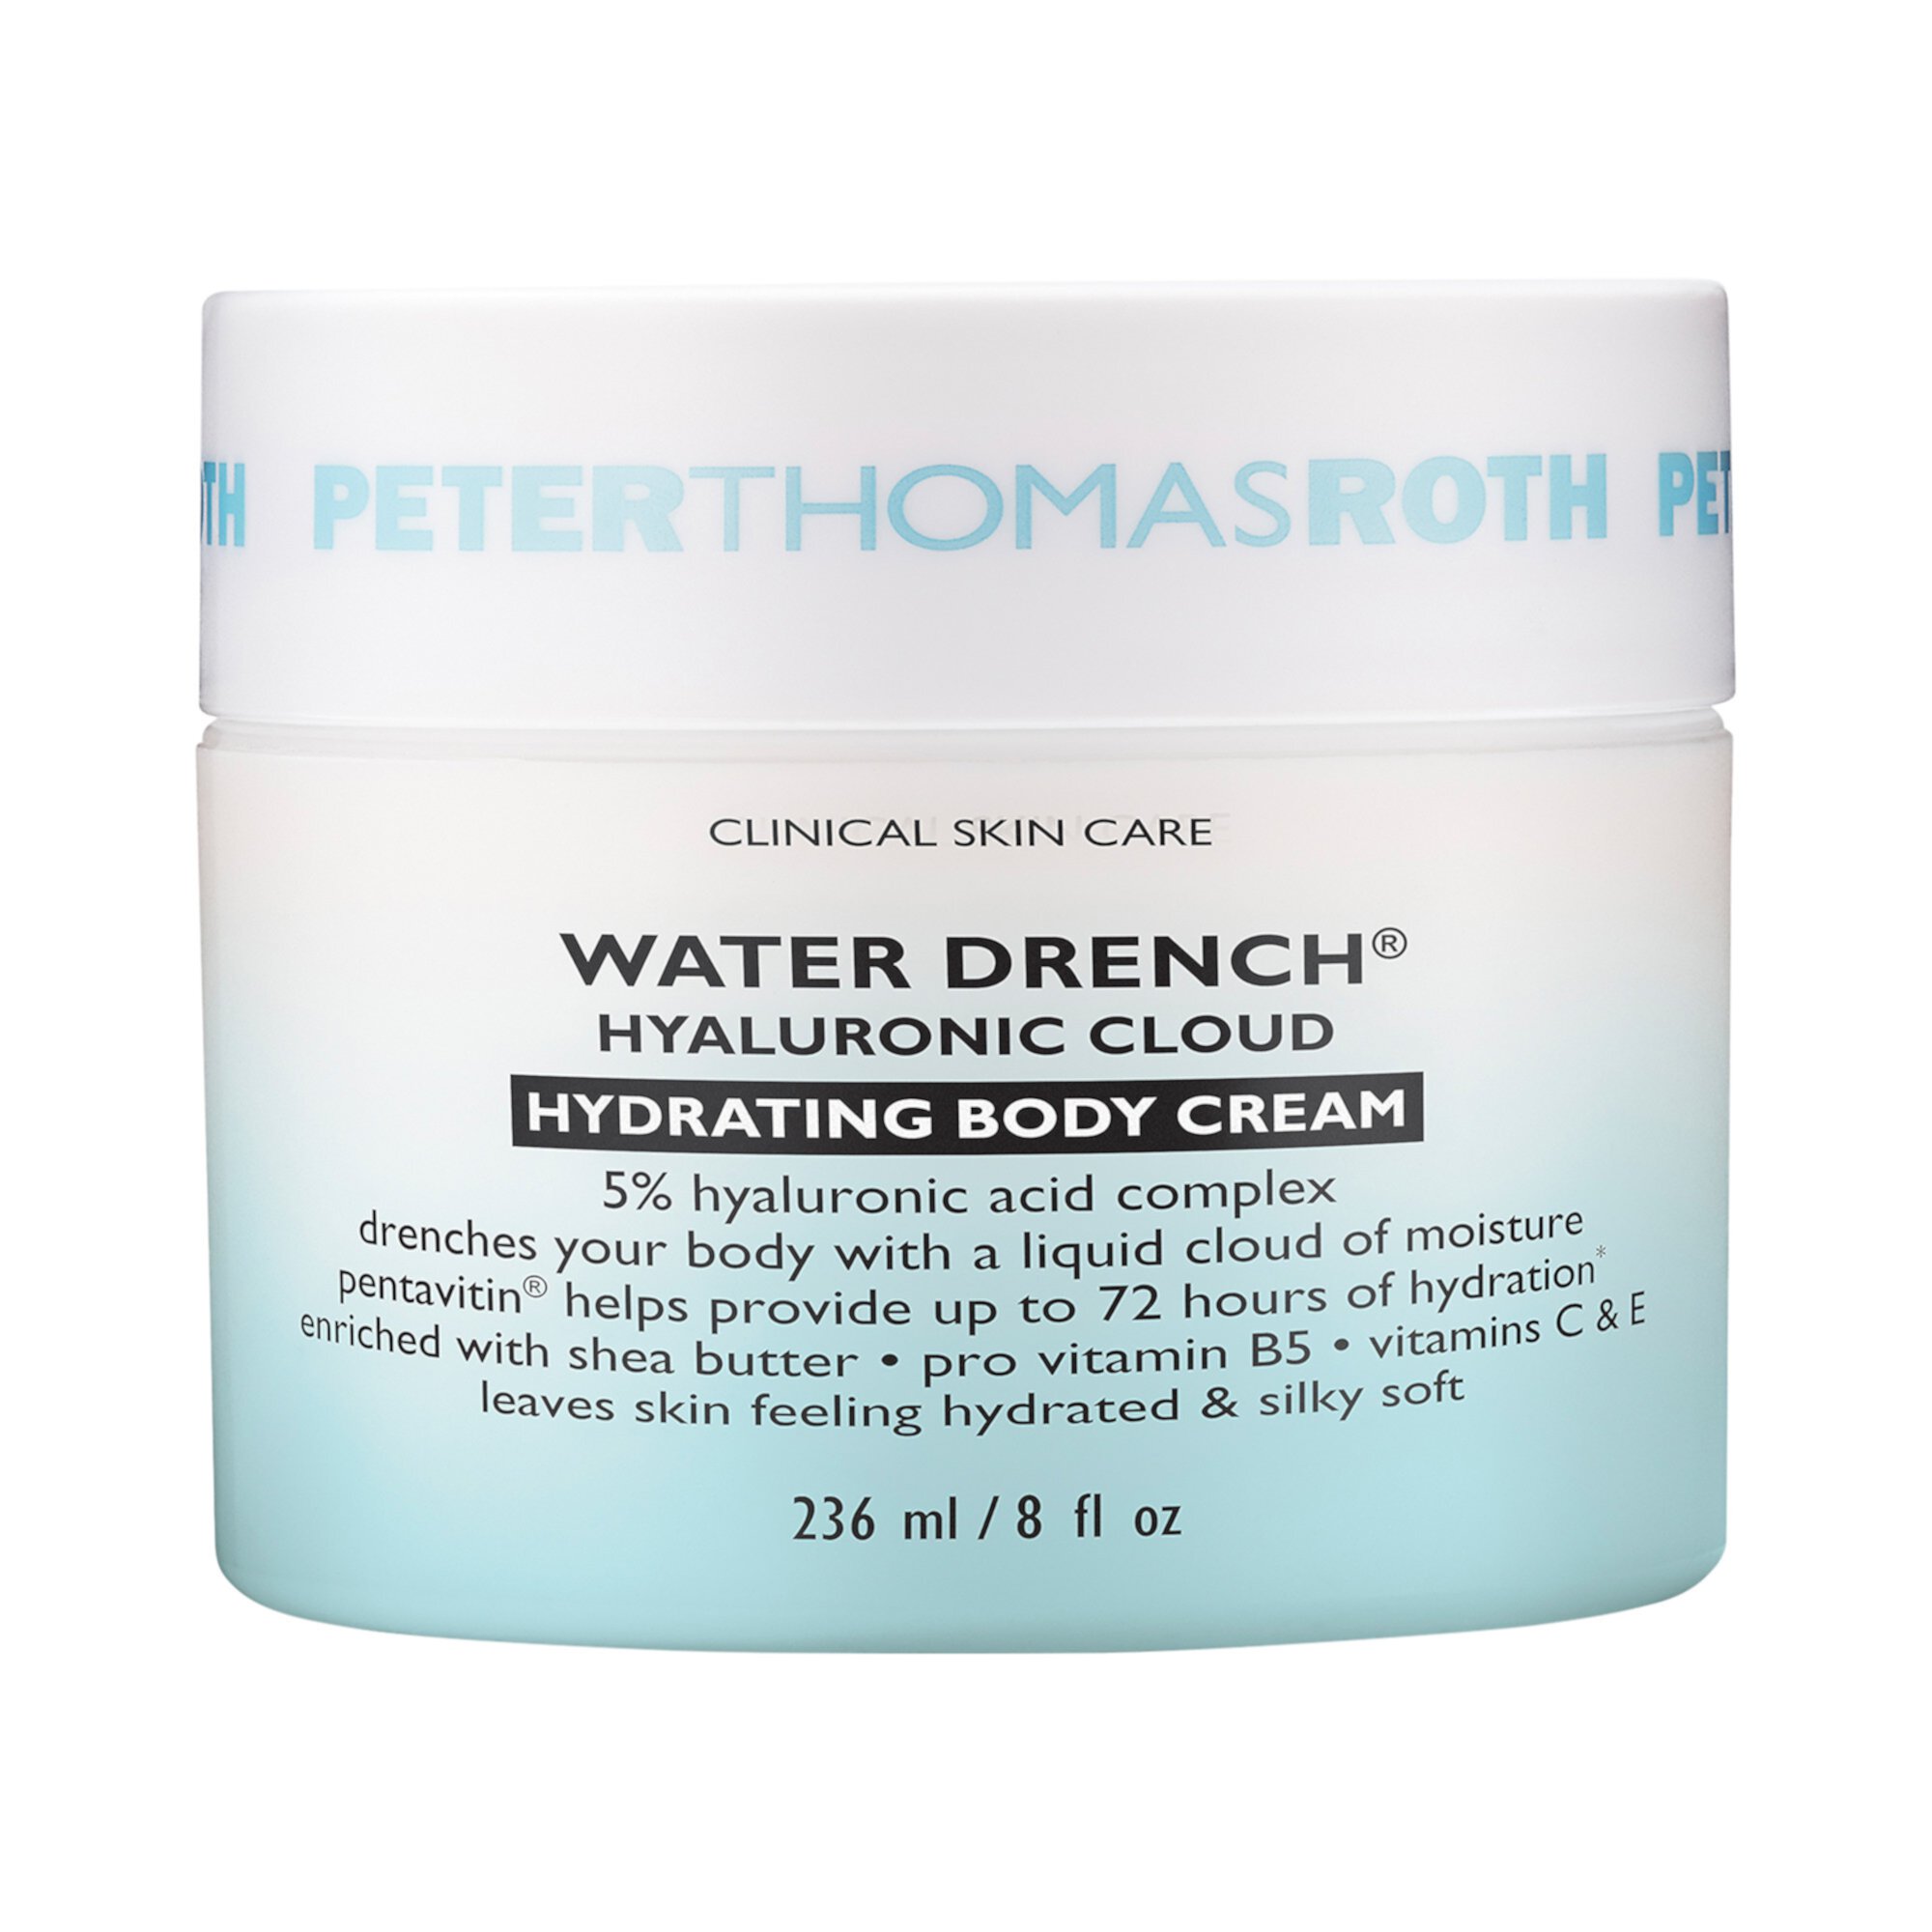 Water Drench® Hyaluronic Cloud увлажняющий крем для тела Peter Thomas Roth